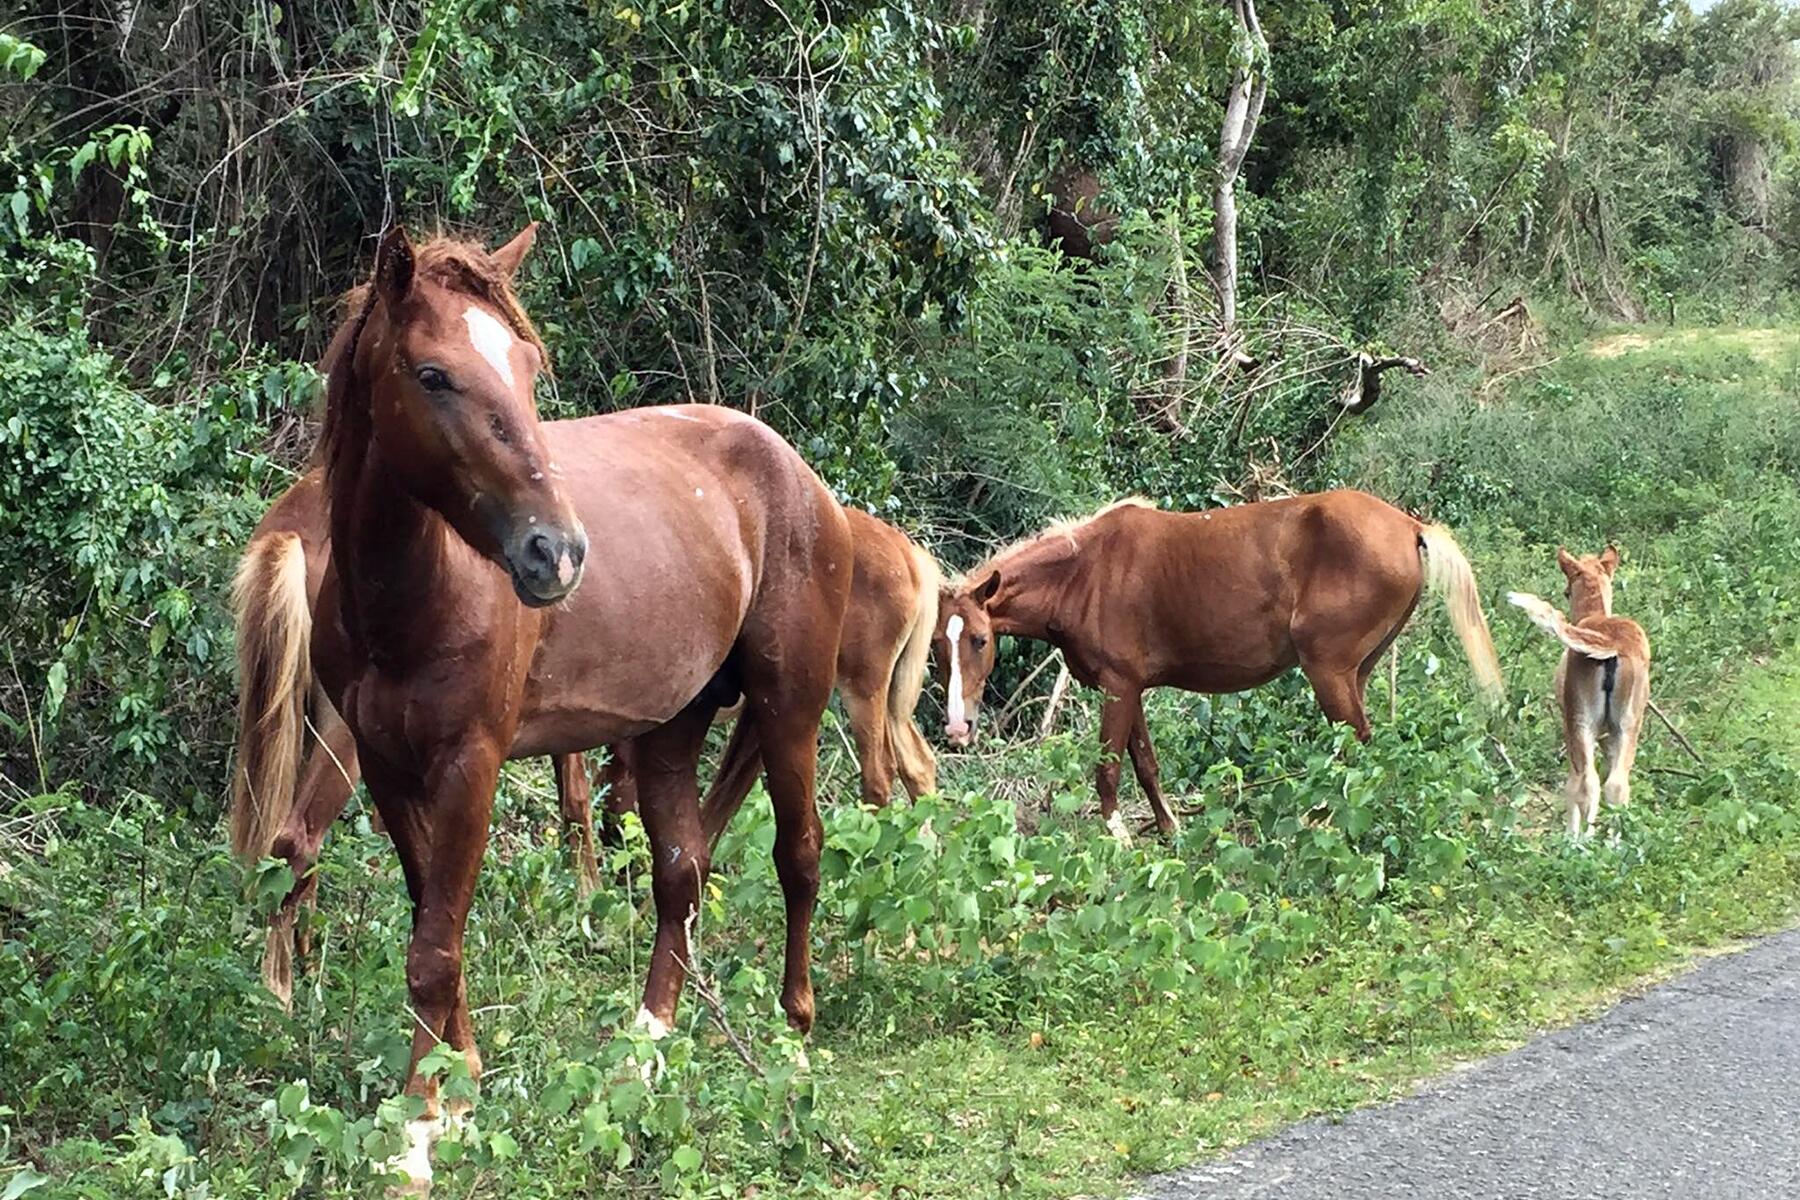 vias roadside horses_Vieques Island Animal Sanctuary